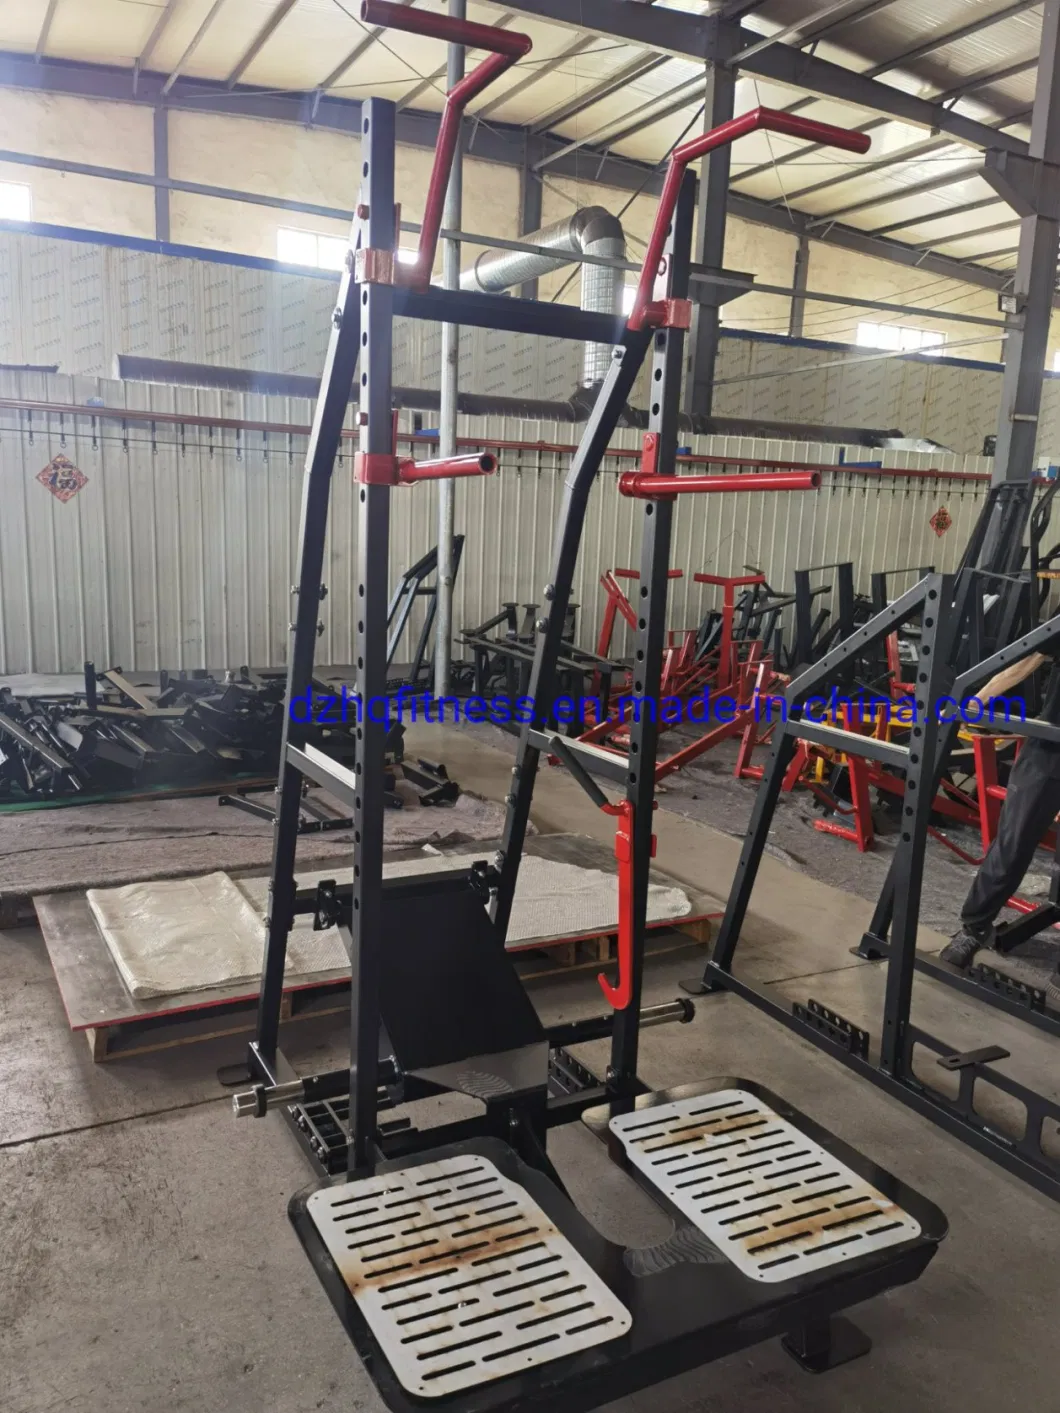 Professional Commercial Home Gym Plat Loaded Machine Squat Rack Belt Squat Fitness Equipment